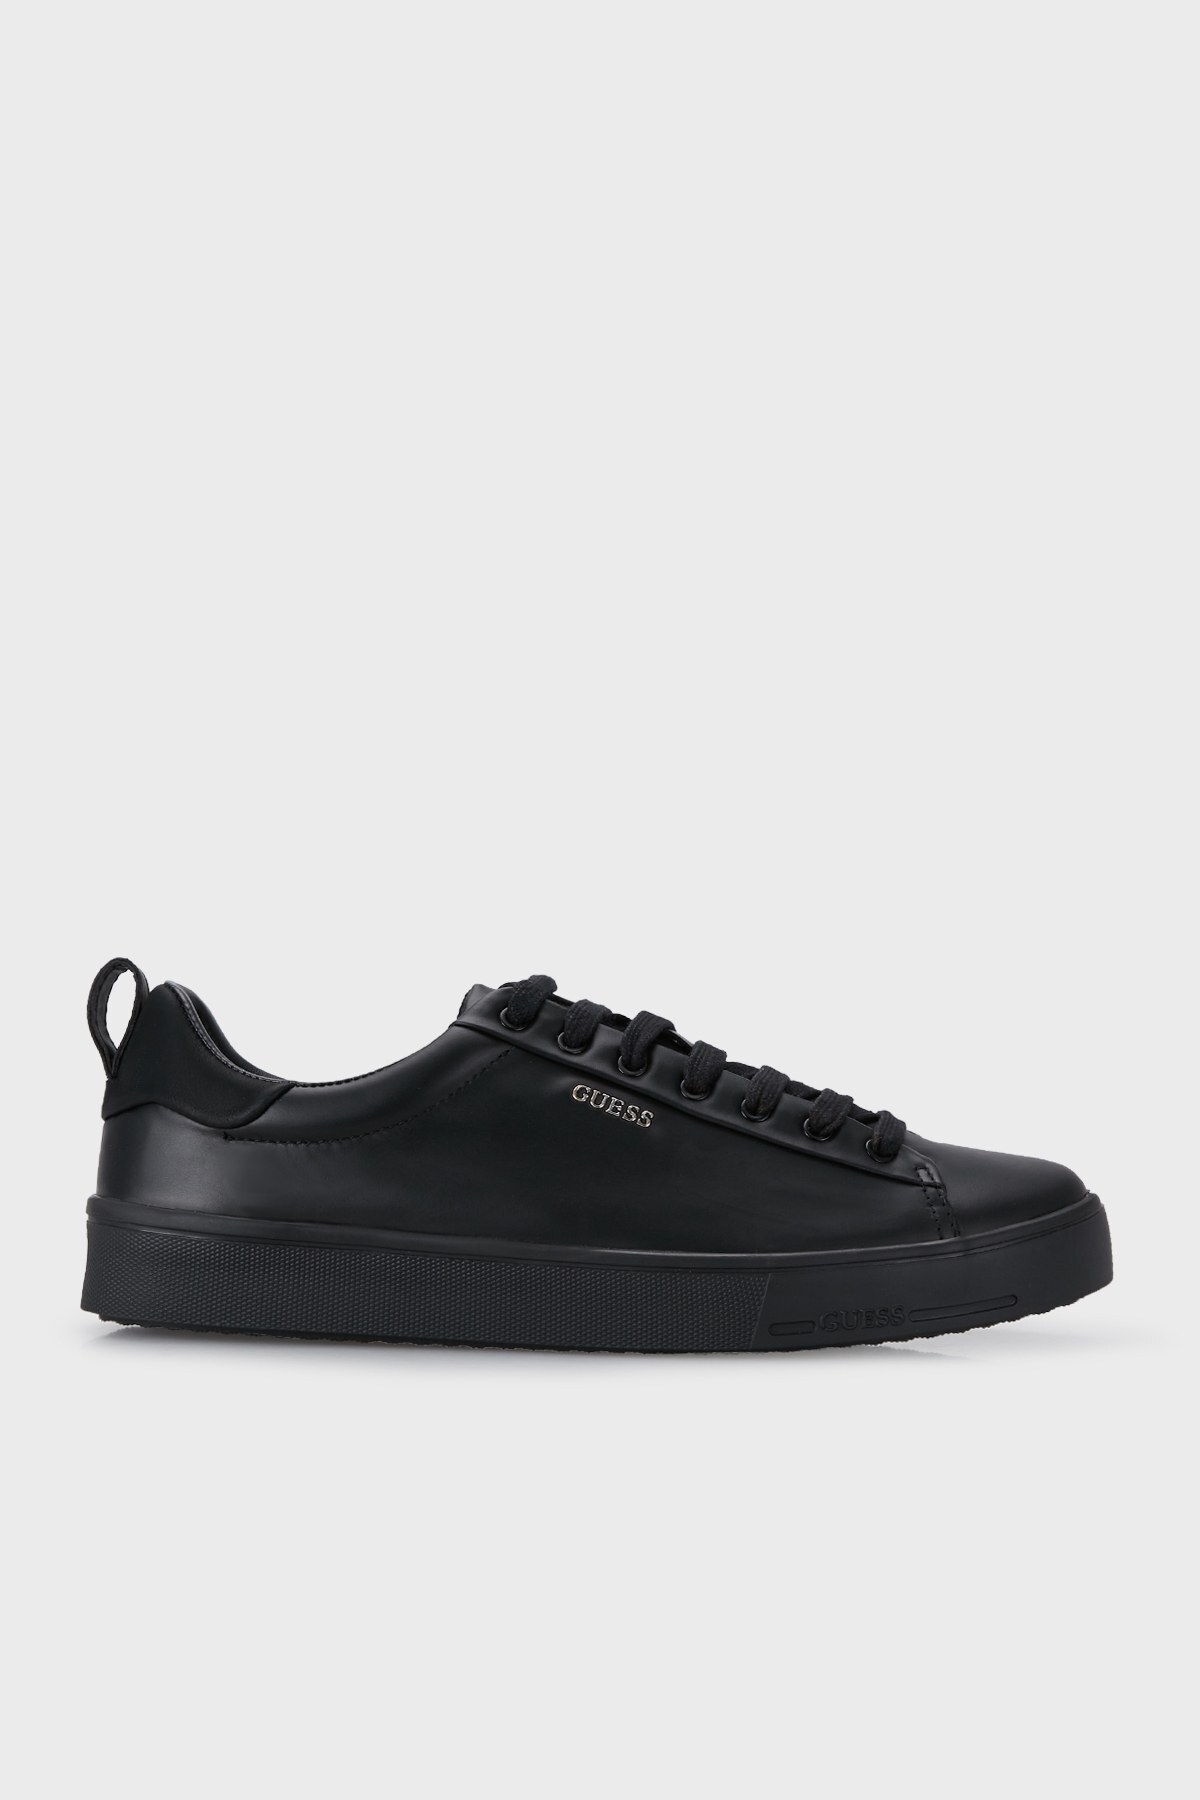 Guess Logolu Bağcıklı Sneaker Erkek Ayakkabı FM9VI8LEA12 BLACK SİYAH